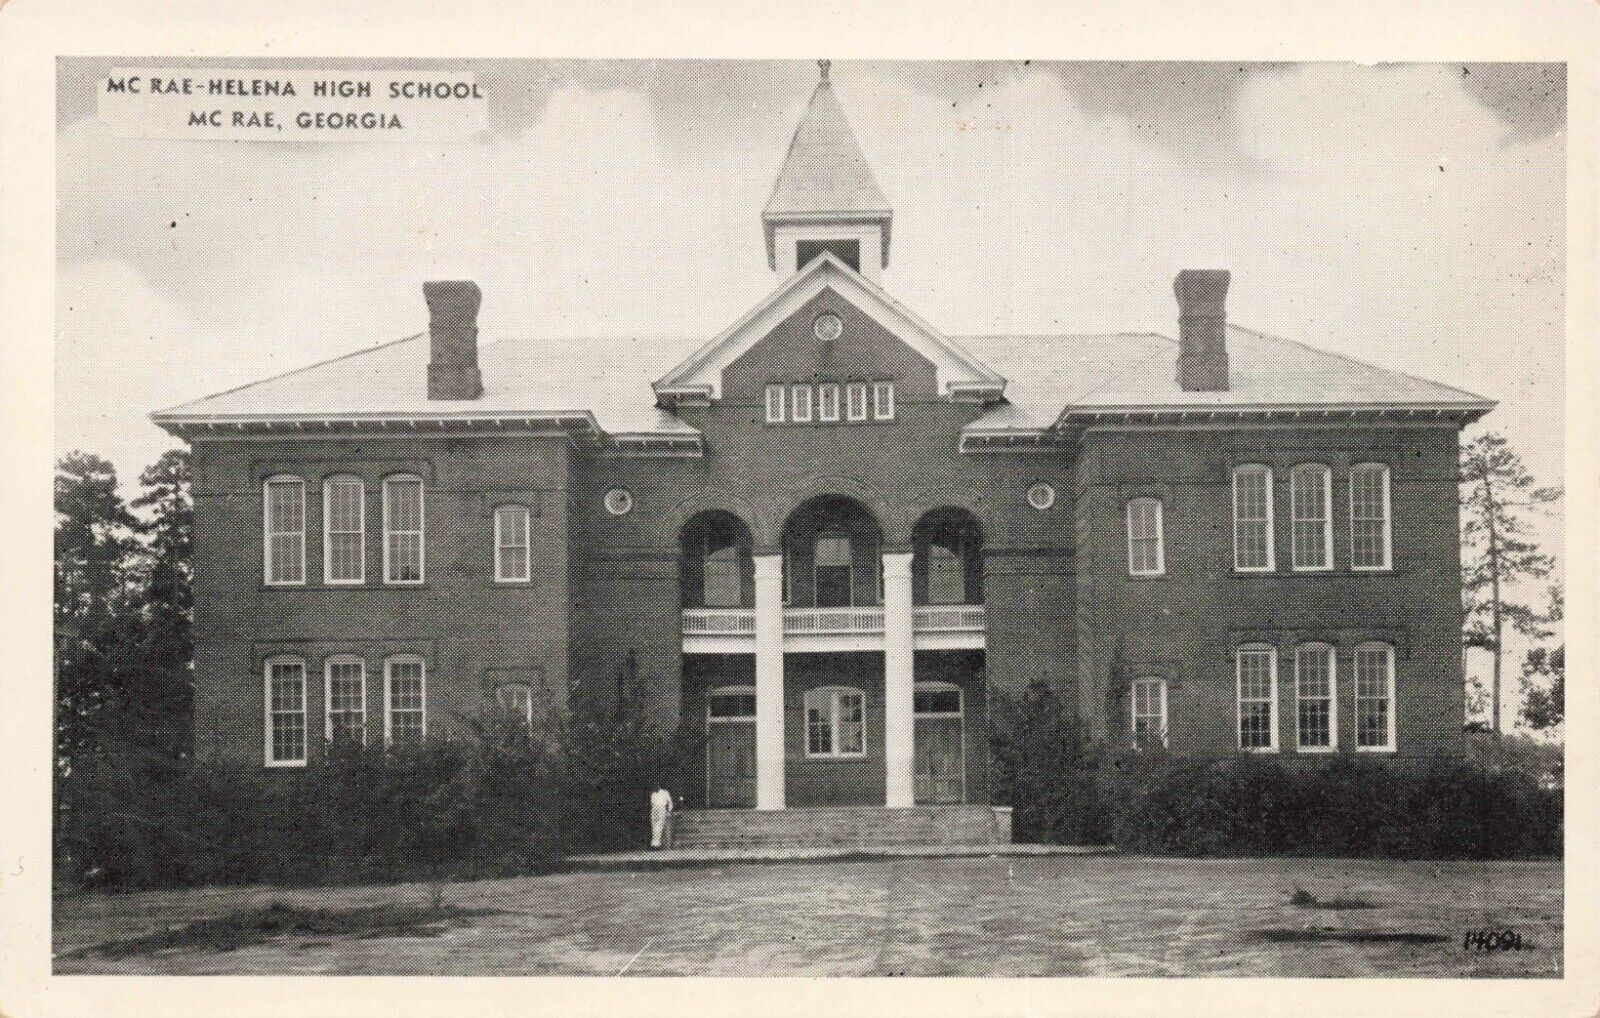 GA-McRae, Georgia-View of the McRae-Helena High School c1930's